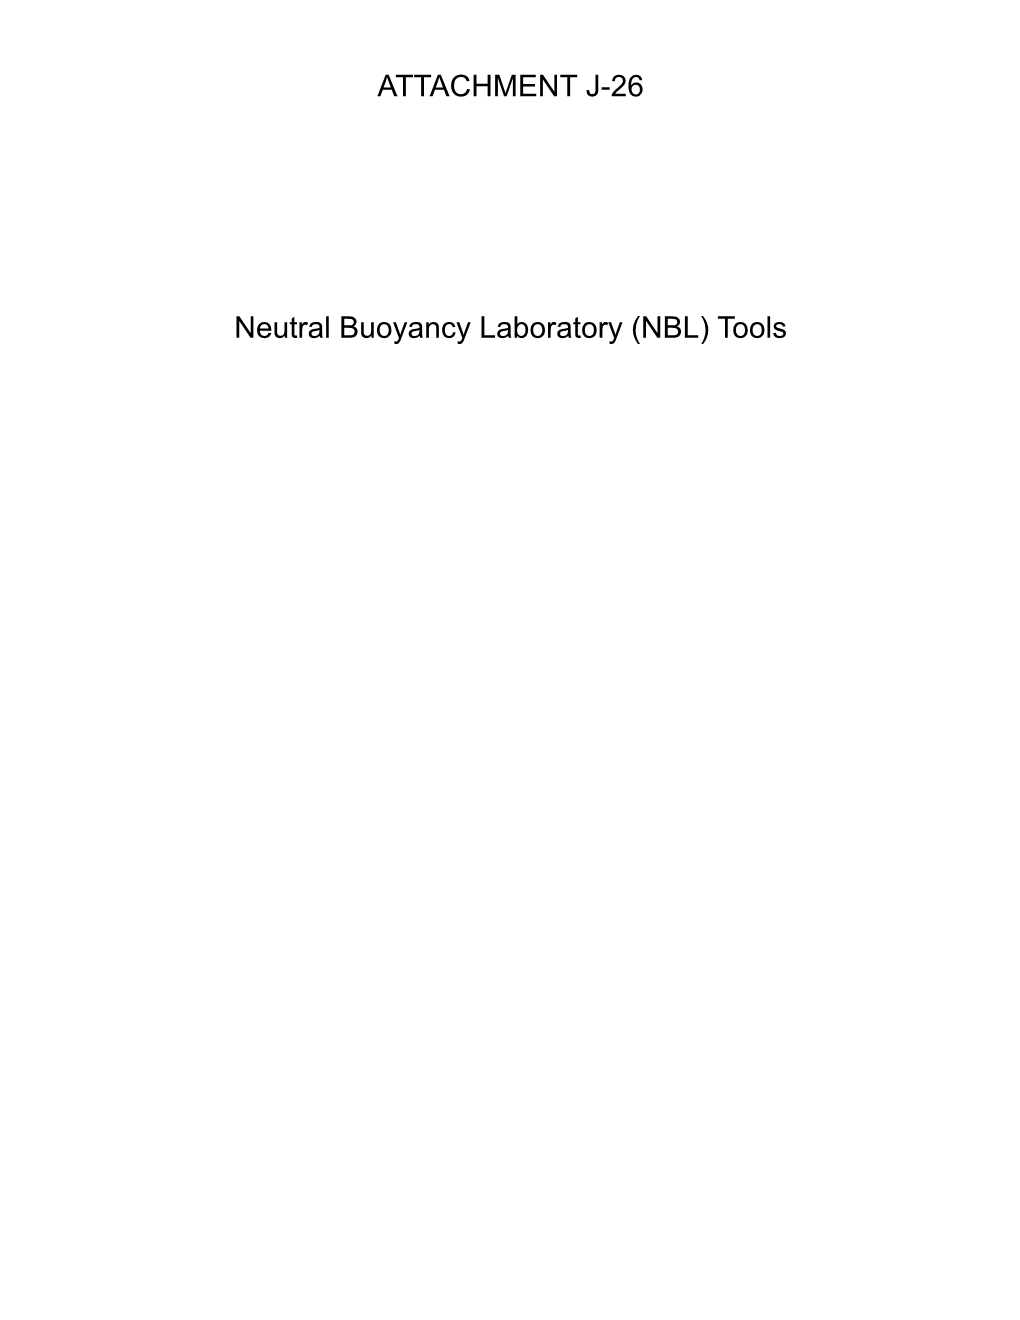 Neutral Buoyancy Laboratory (NBL) Tools